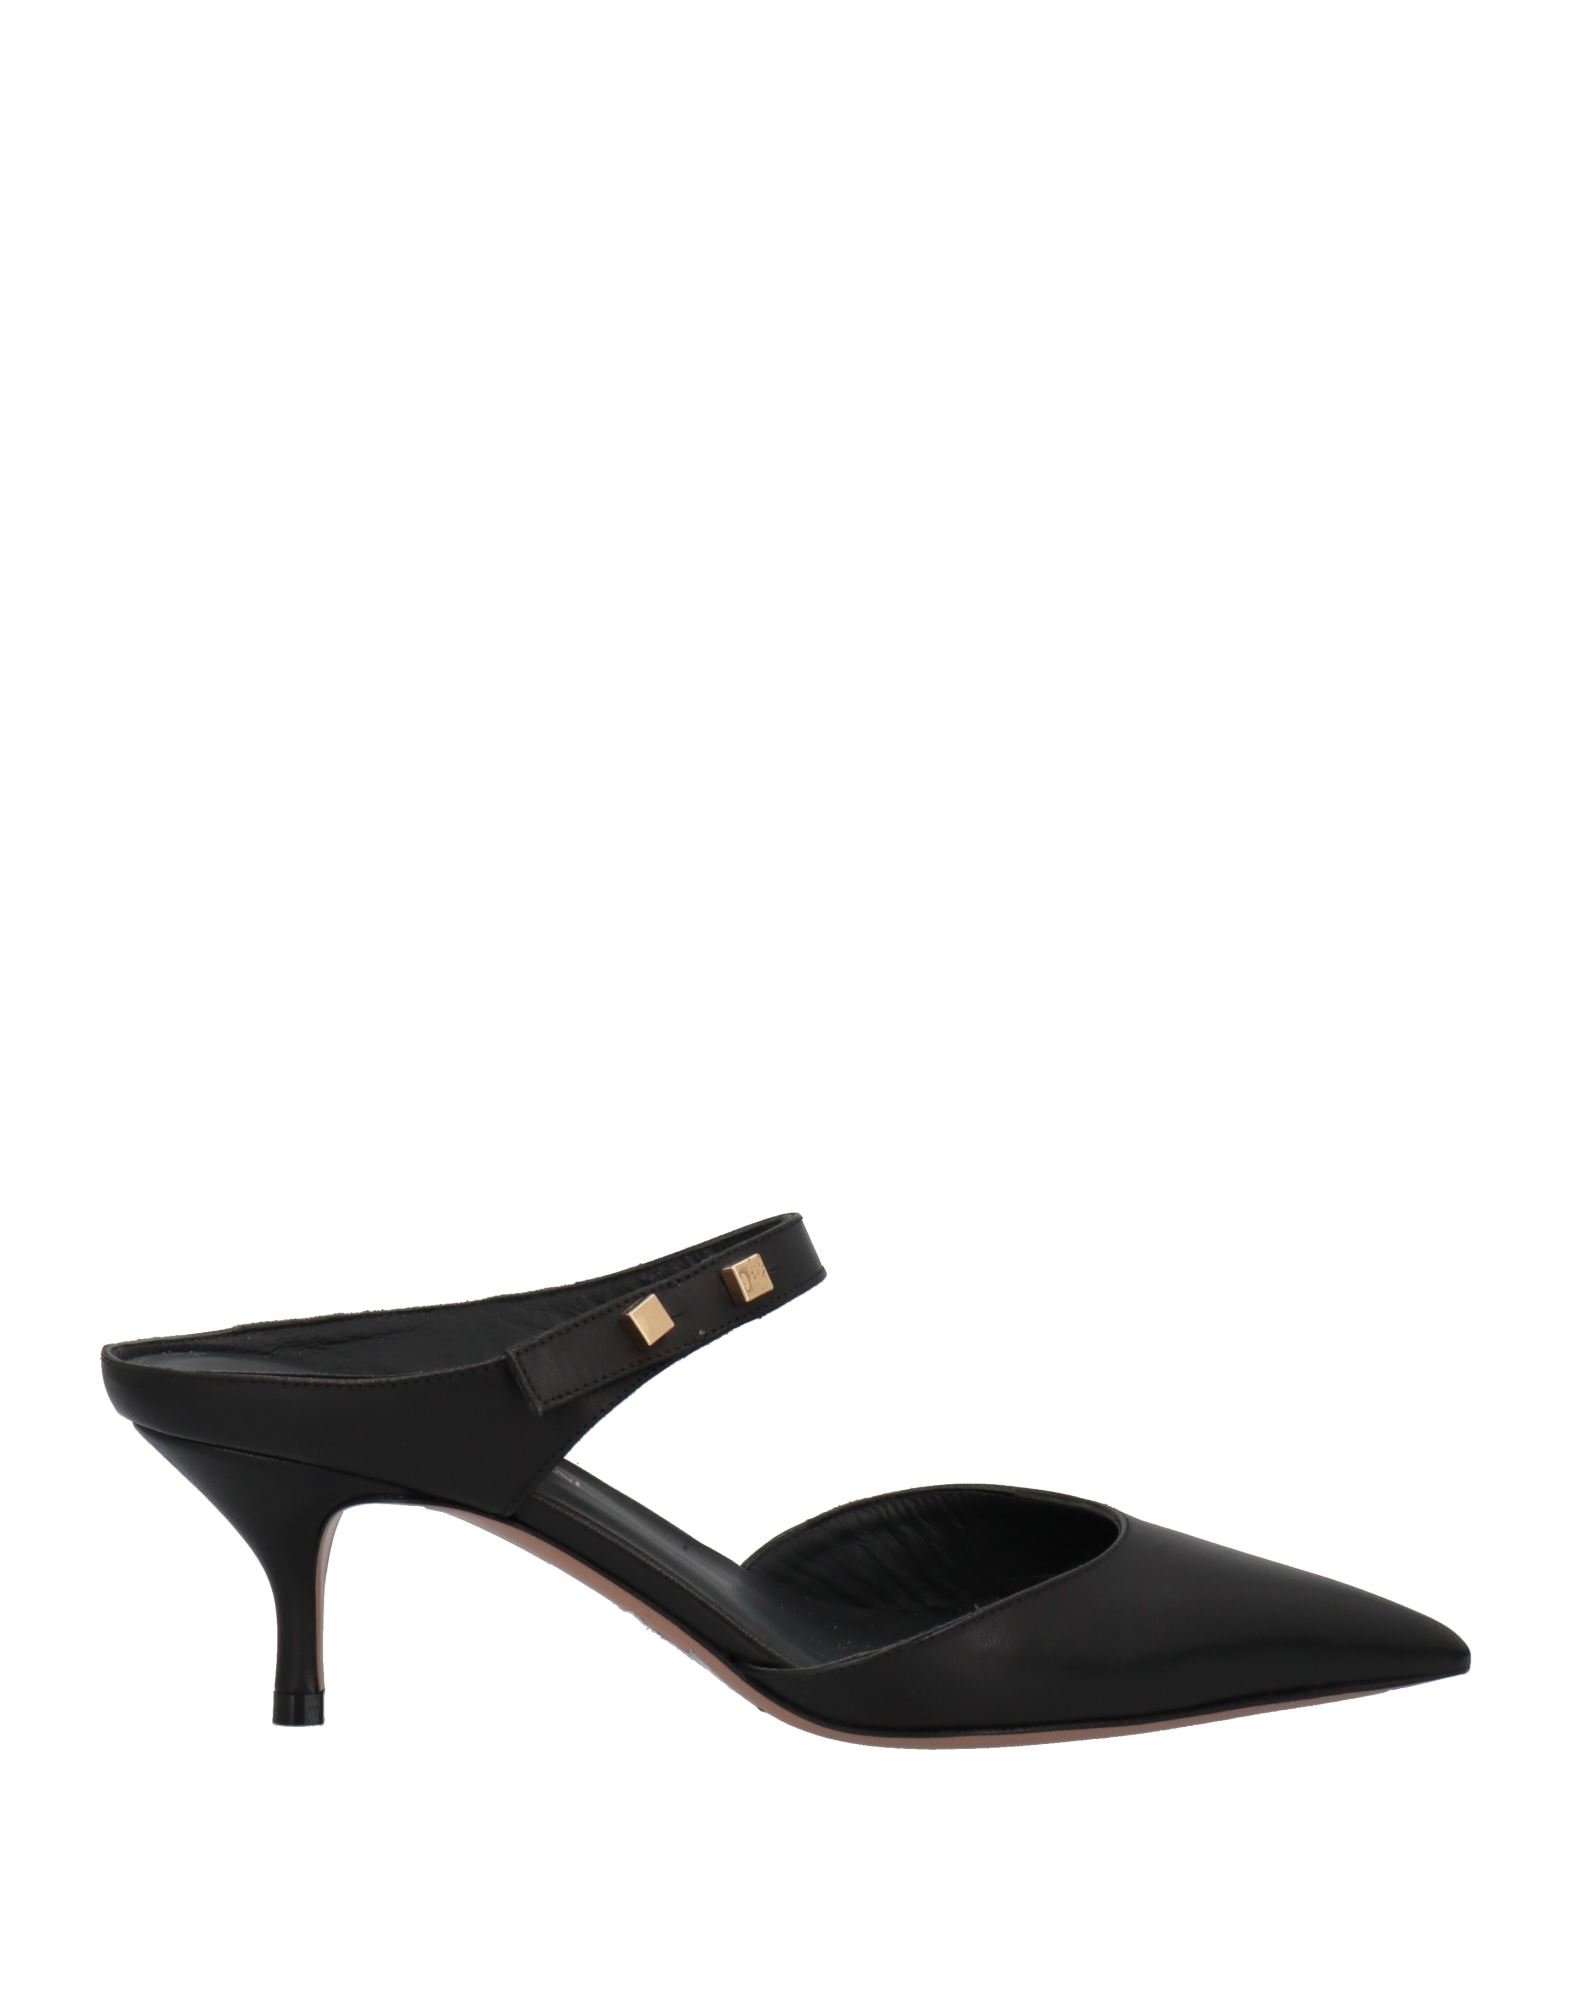 Emporio Armani Woman Mules & Clogs Black Size 4.5 Soft Leather